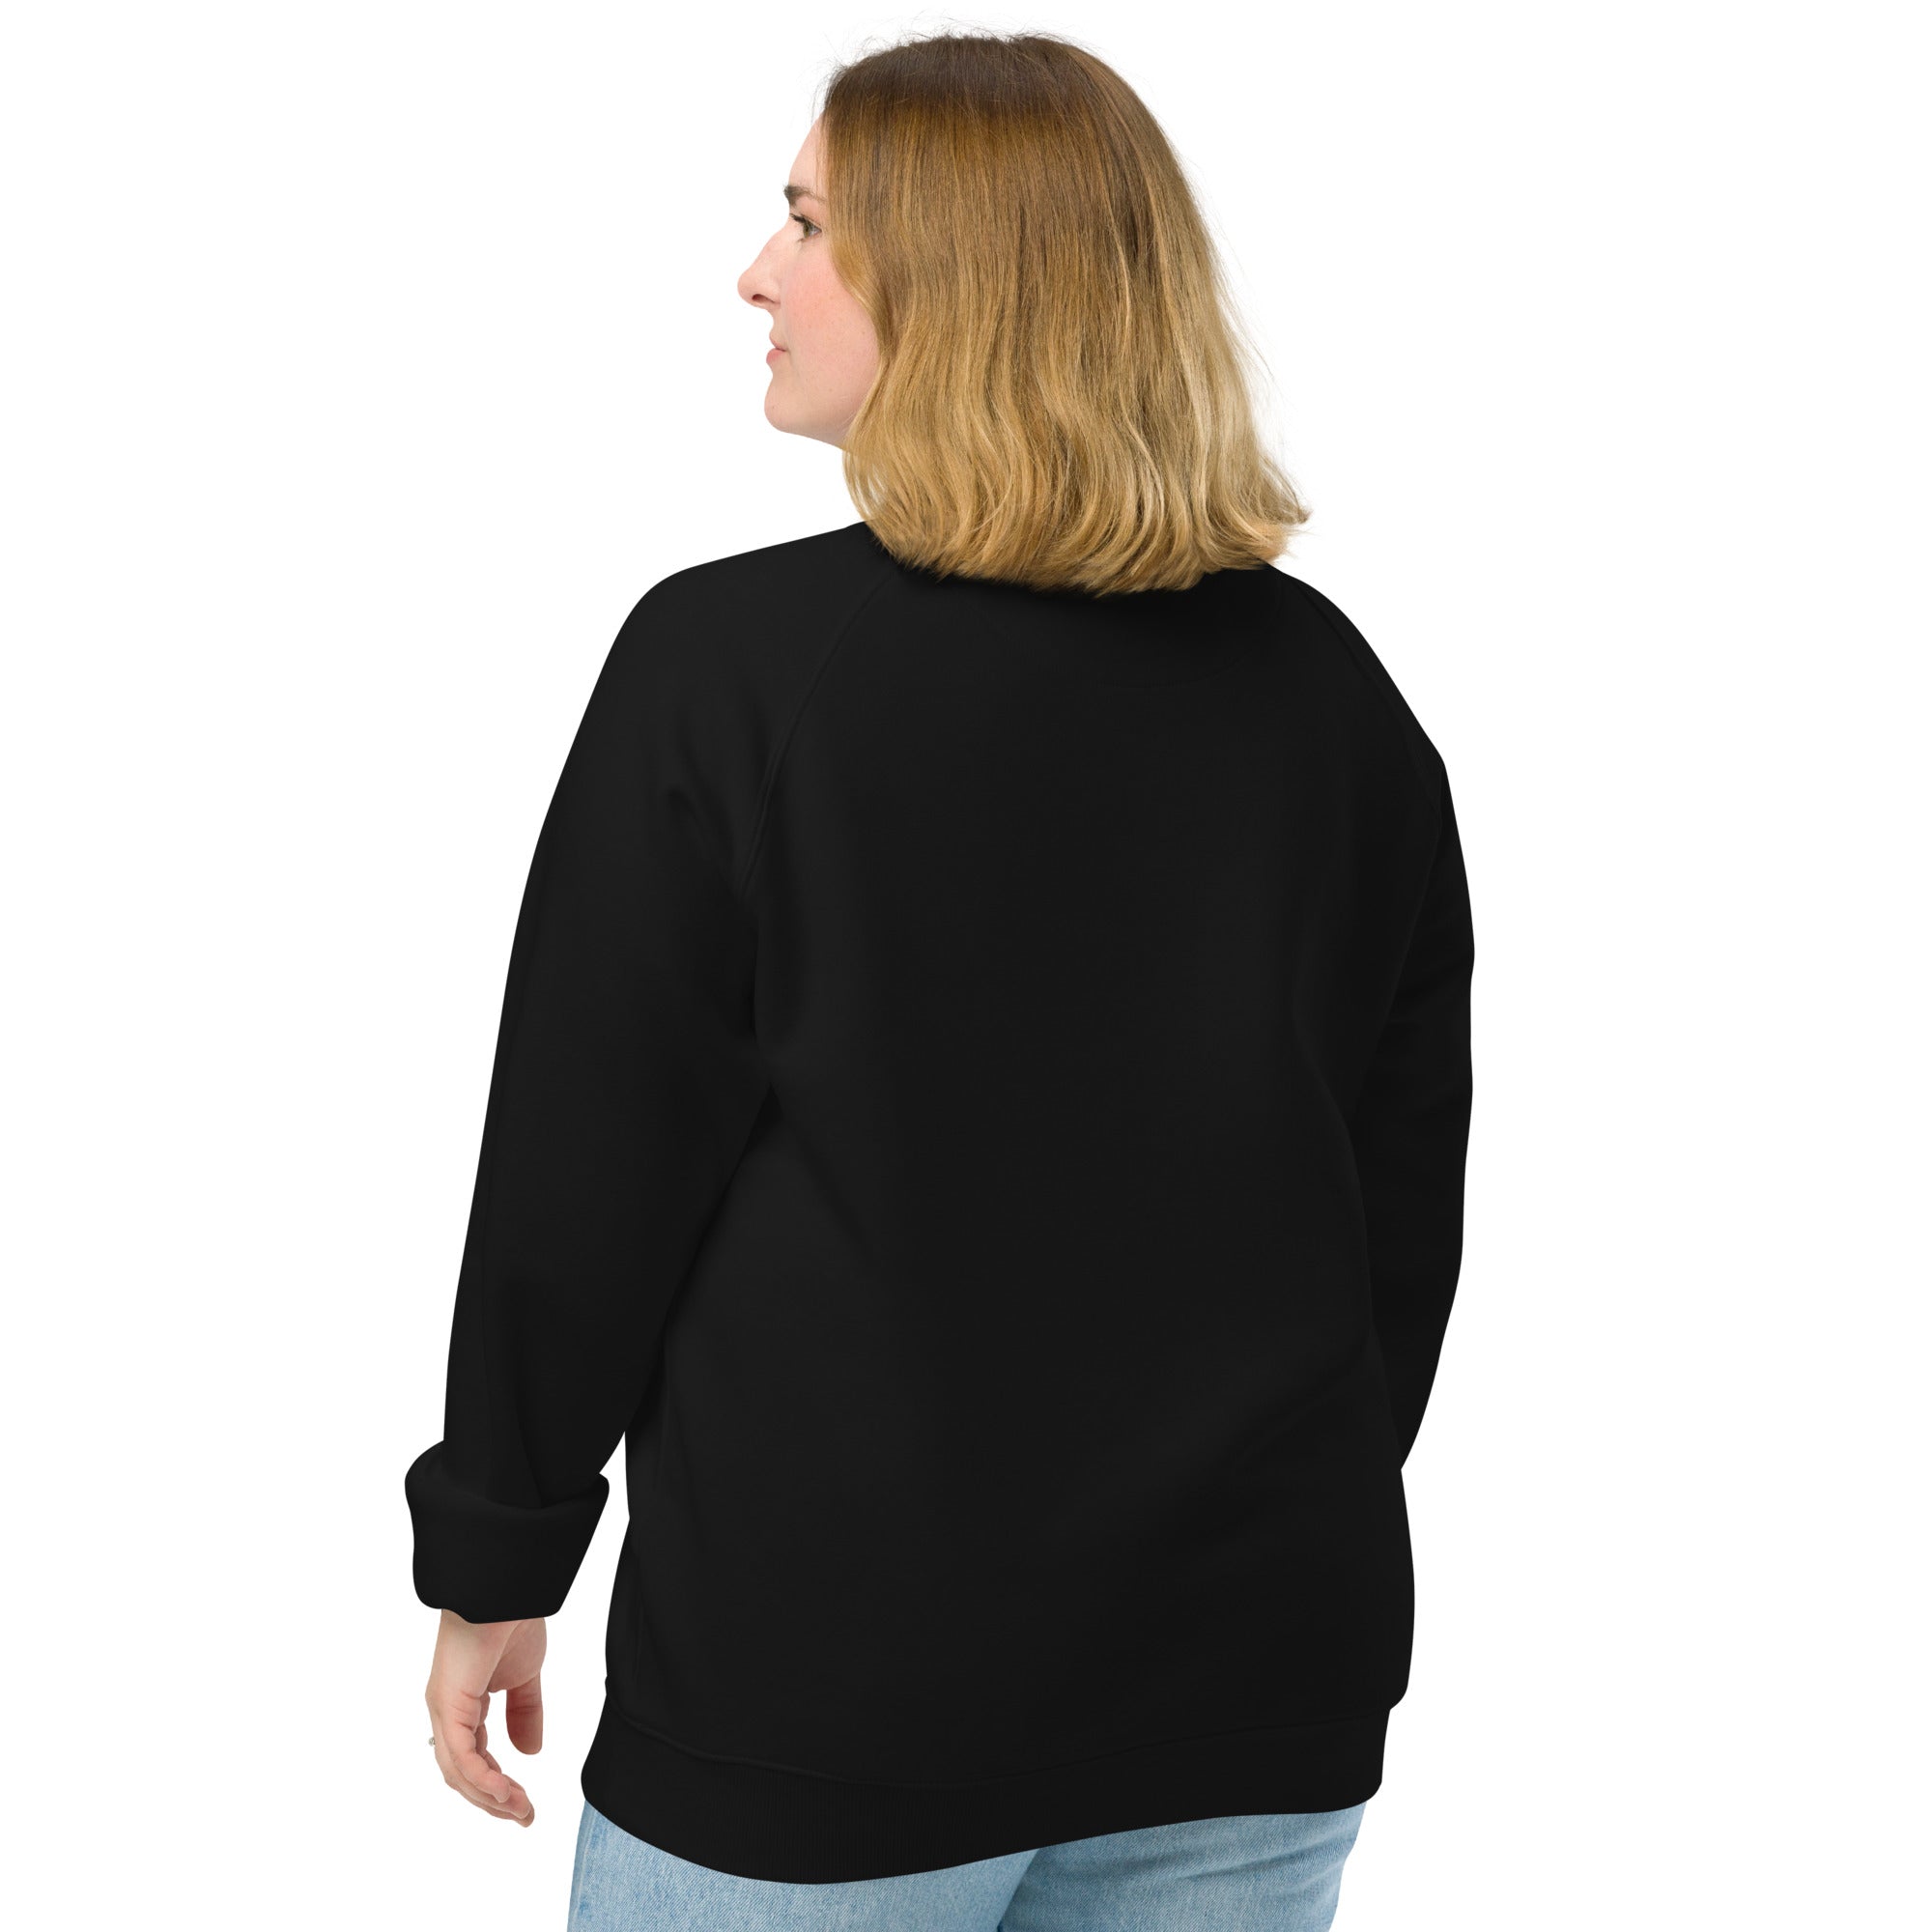 Delaware Logo W - Black Unisex organic raglan sweatshirt